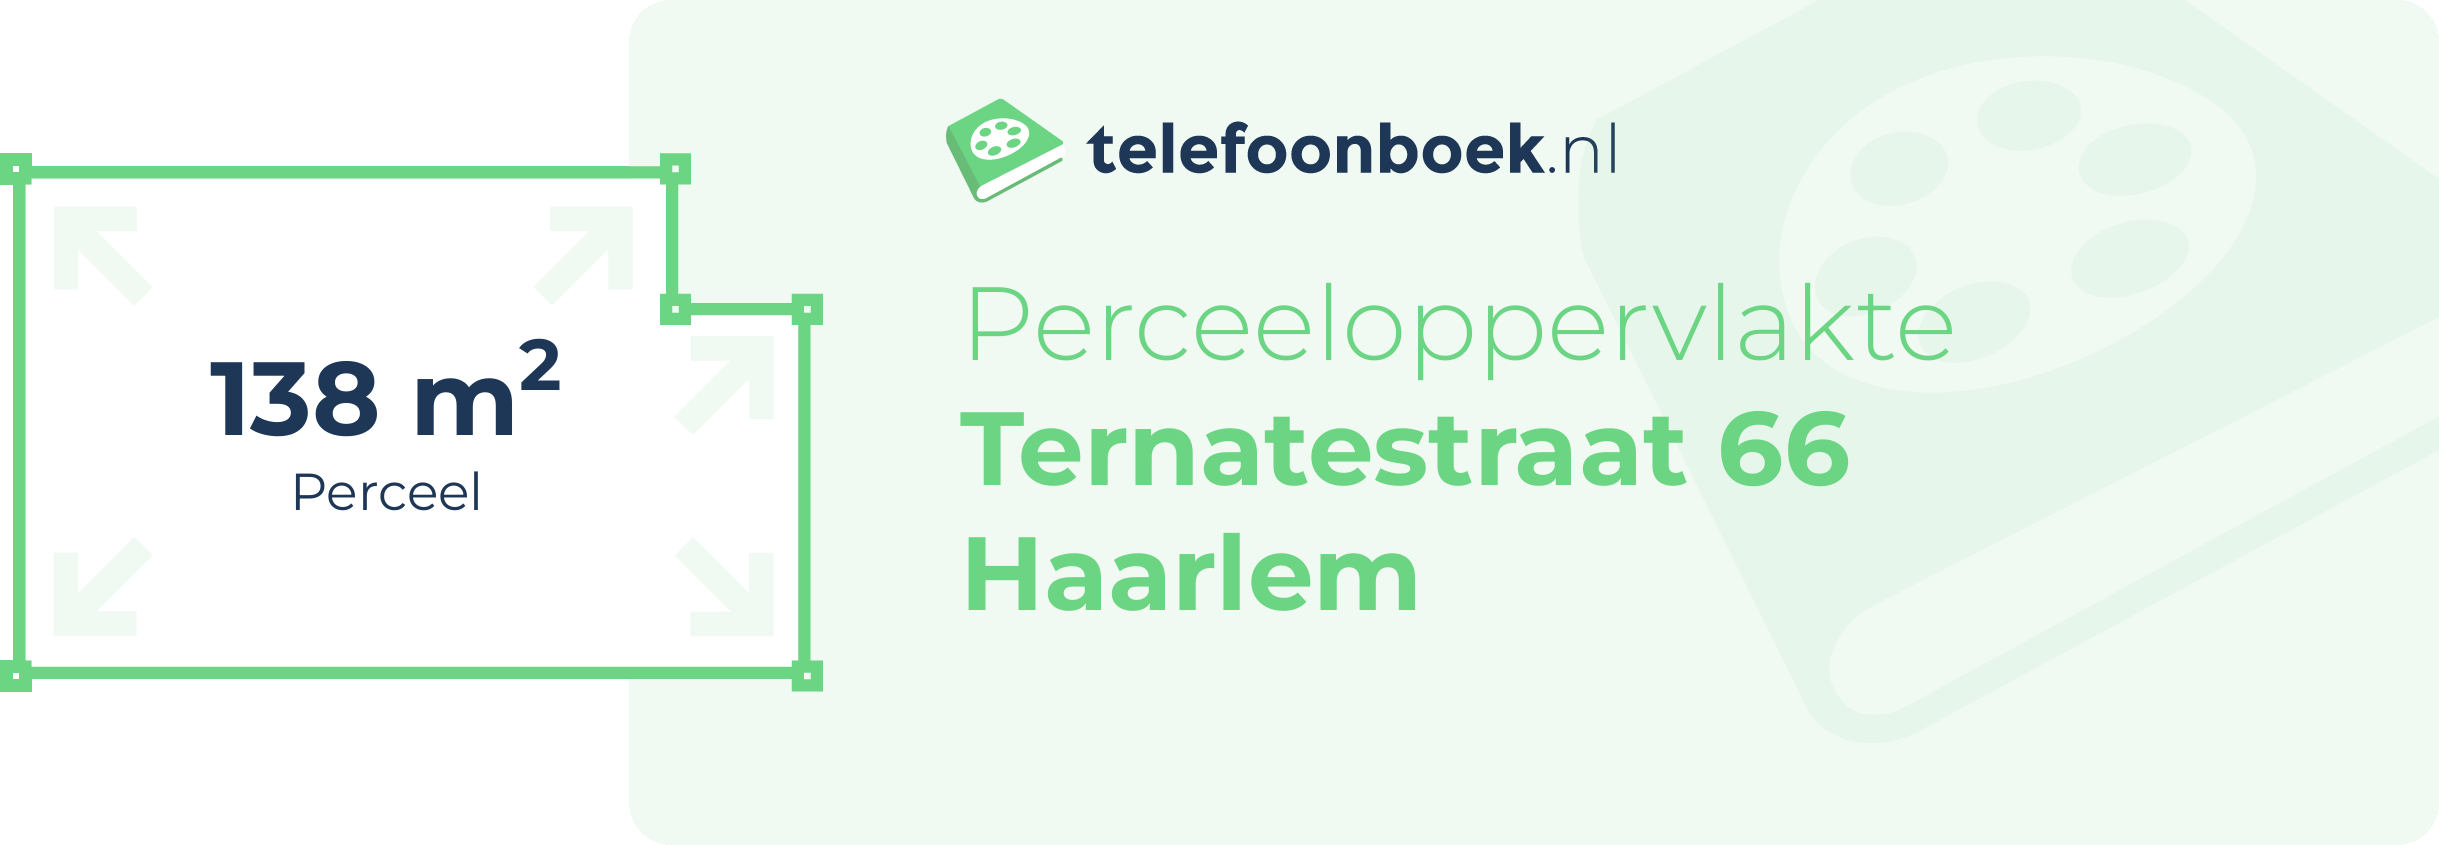 Perceeloppervlakte Ternatestraat 66 Haarlem